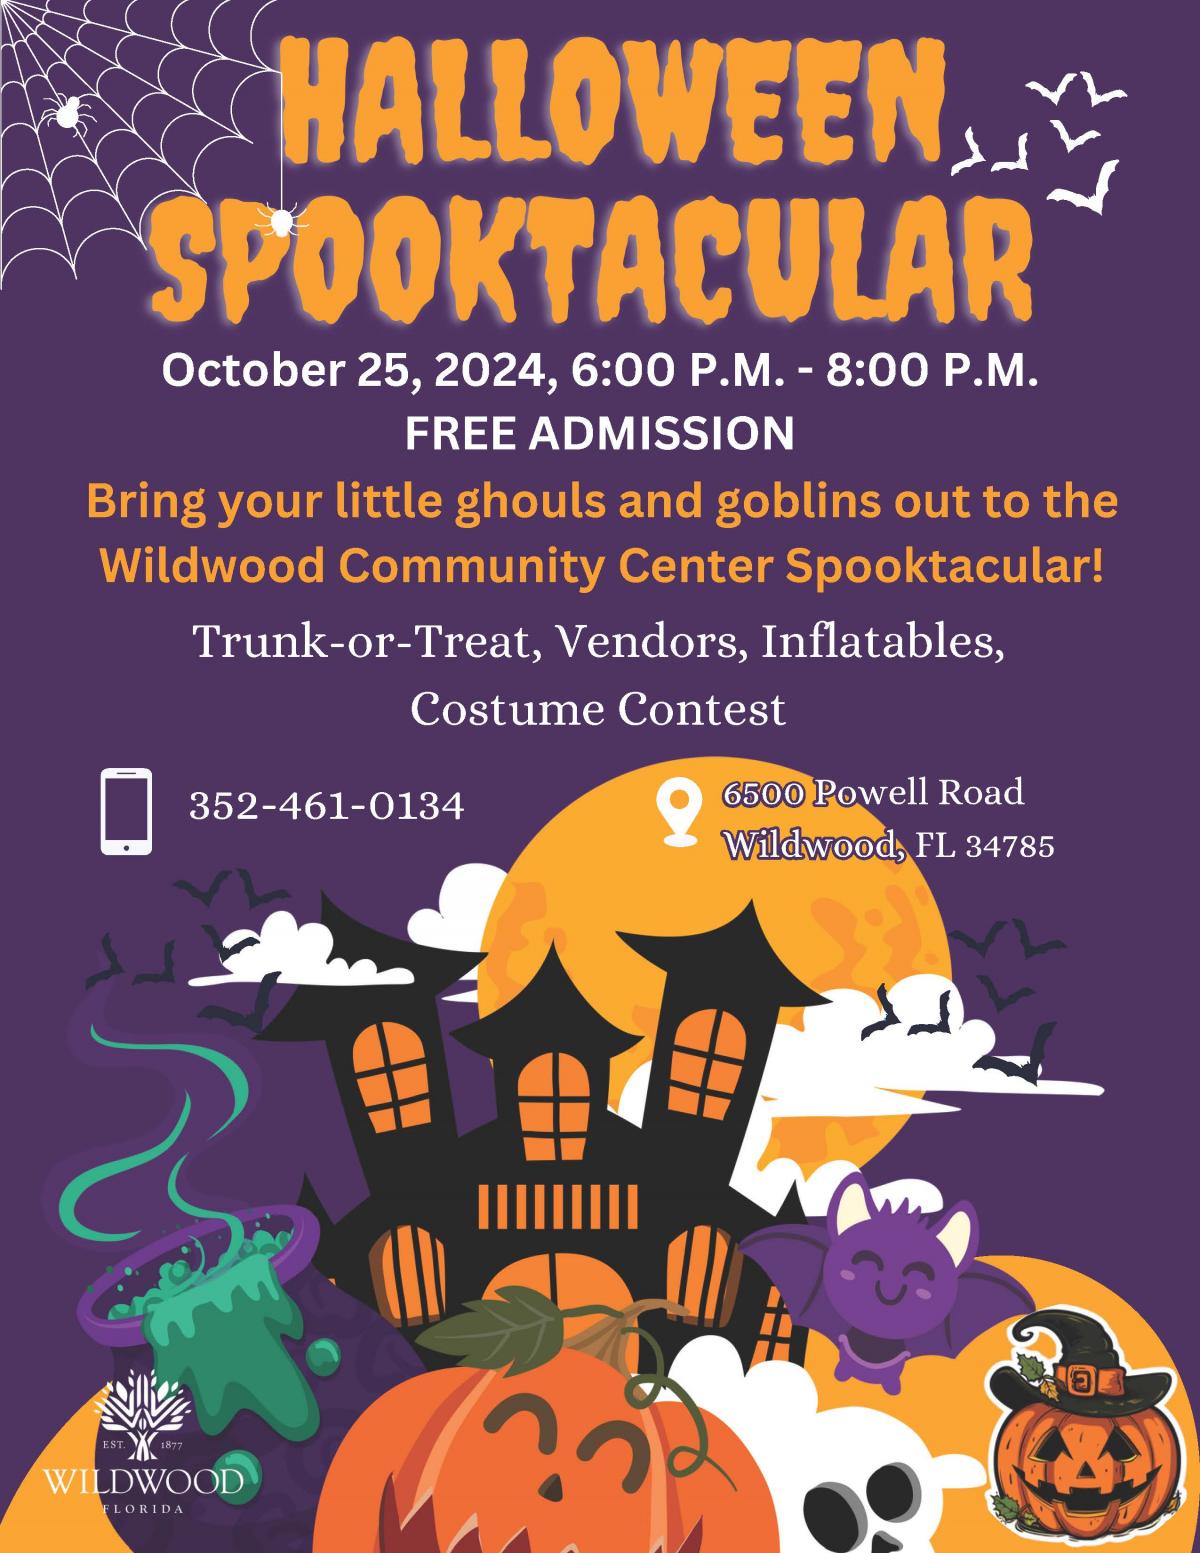 City of Wildwood Spooktacular, Friday, October 25, 2024, Wildwood Community Center 6500 Powell Road Wildwood, Fl 34785, 6-9 p.m.